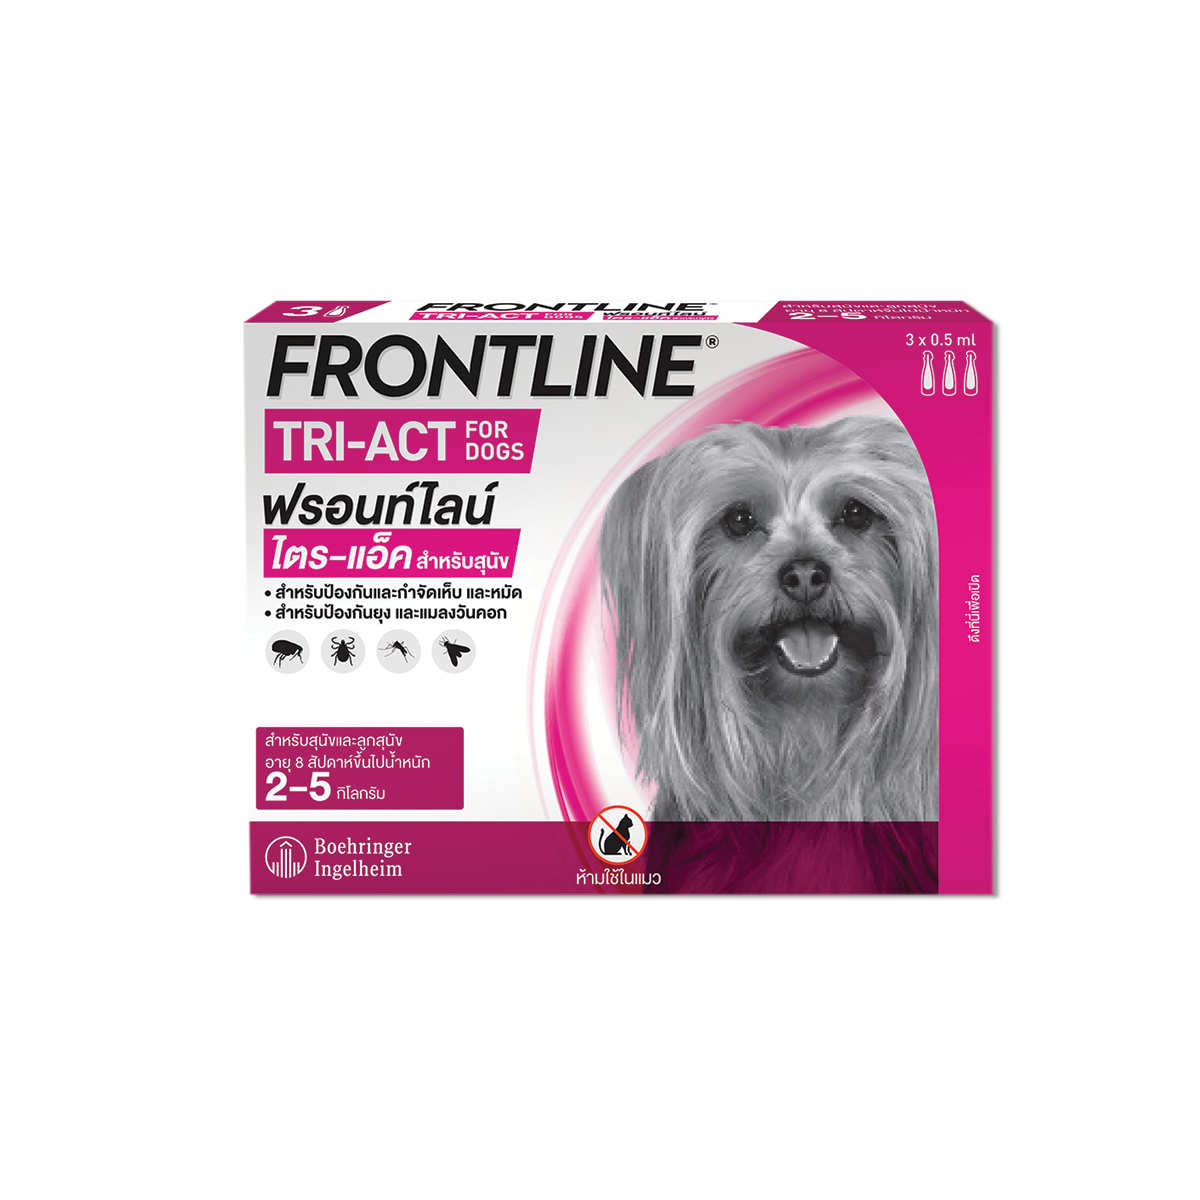 Frontline Tri-Act for Dog Size XS ฟรอนท์ไลน์ ไตร-แอ็ค สำหรับสุนัข น้ำหนัก 2-5 กิโลกรัม